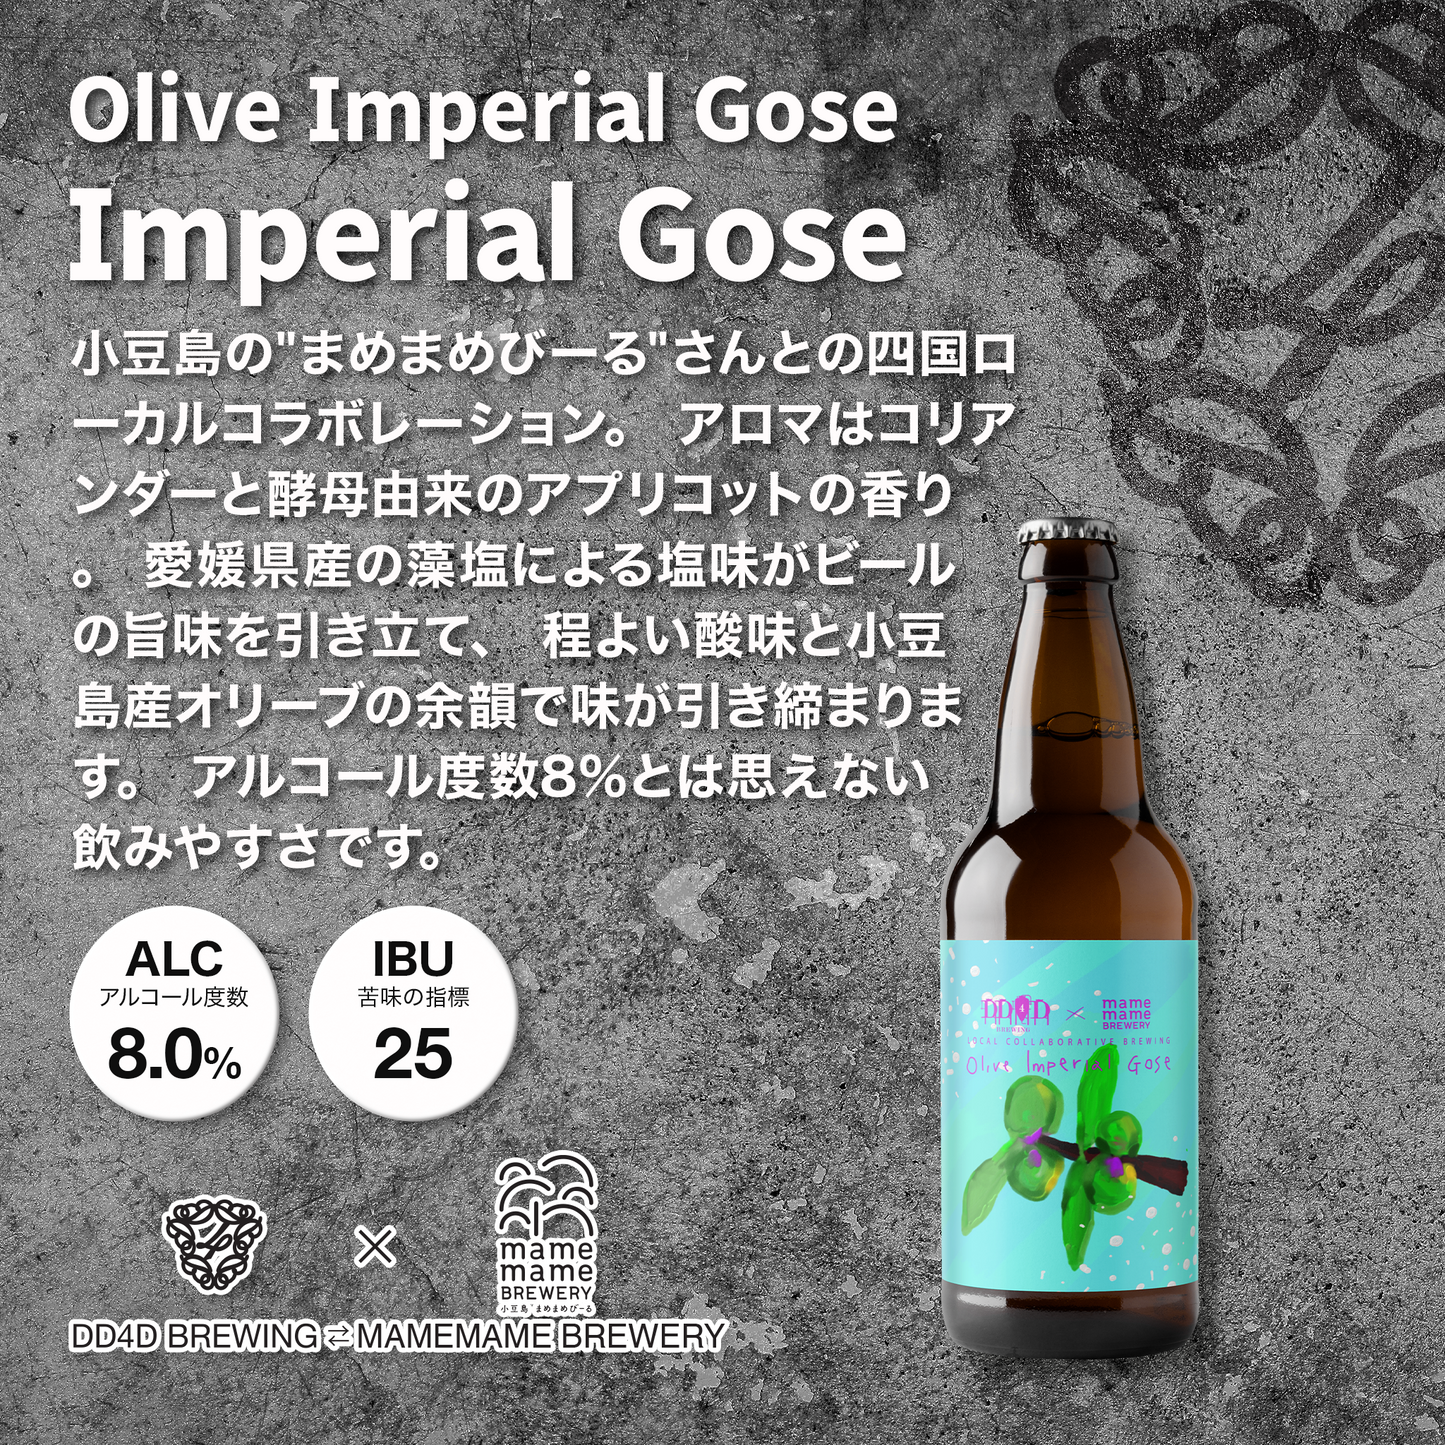 Olive Imperial Gose Set